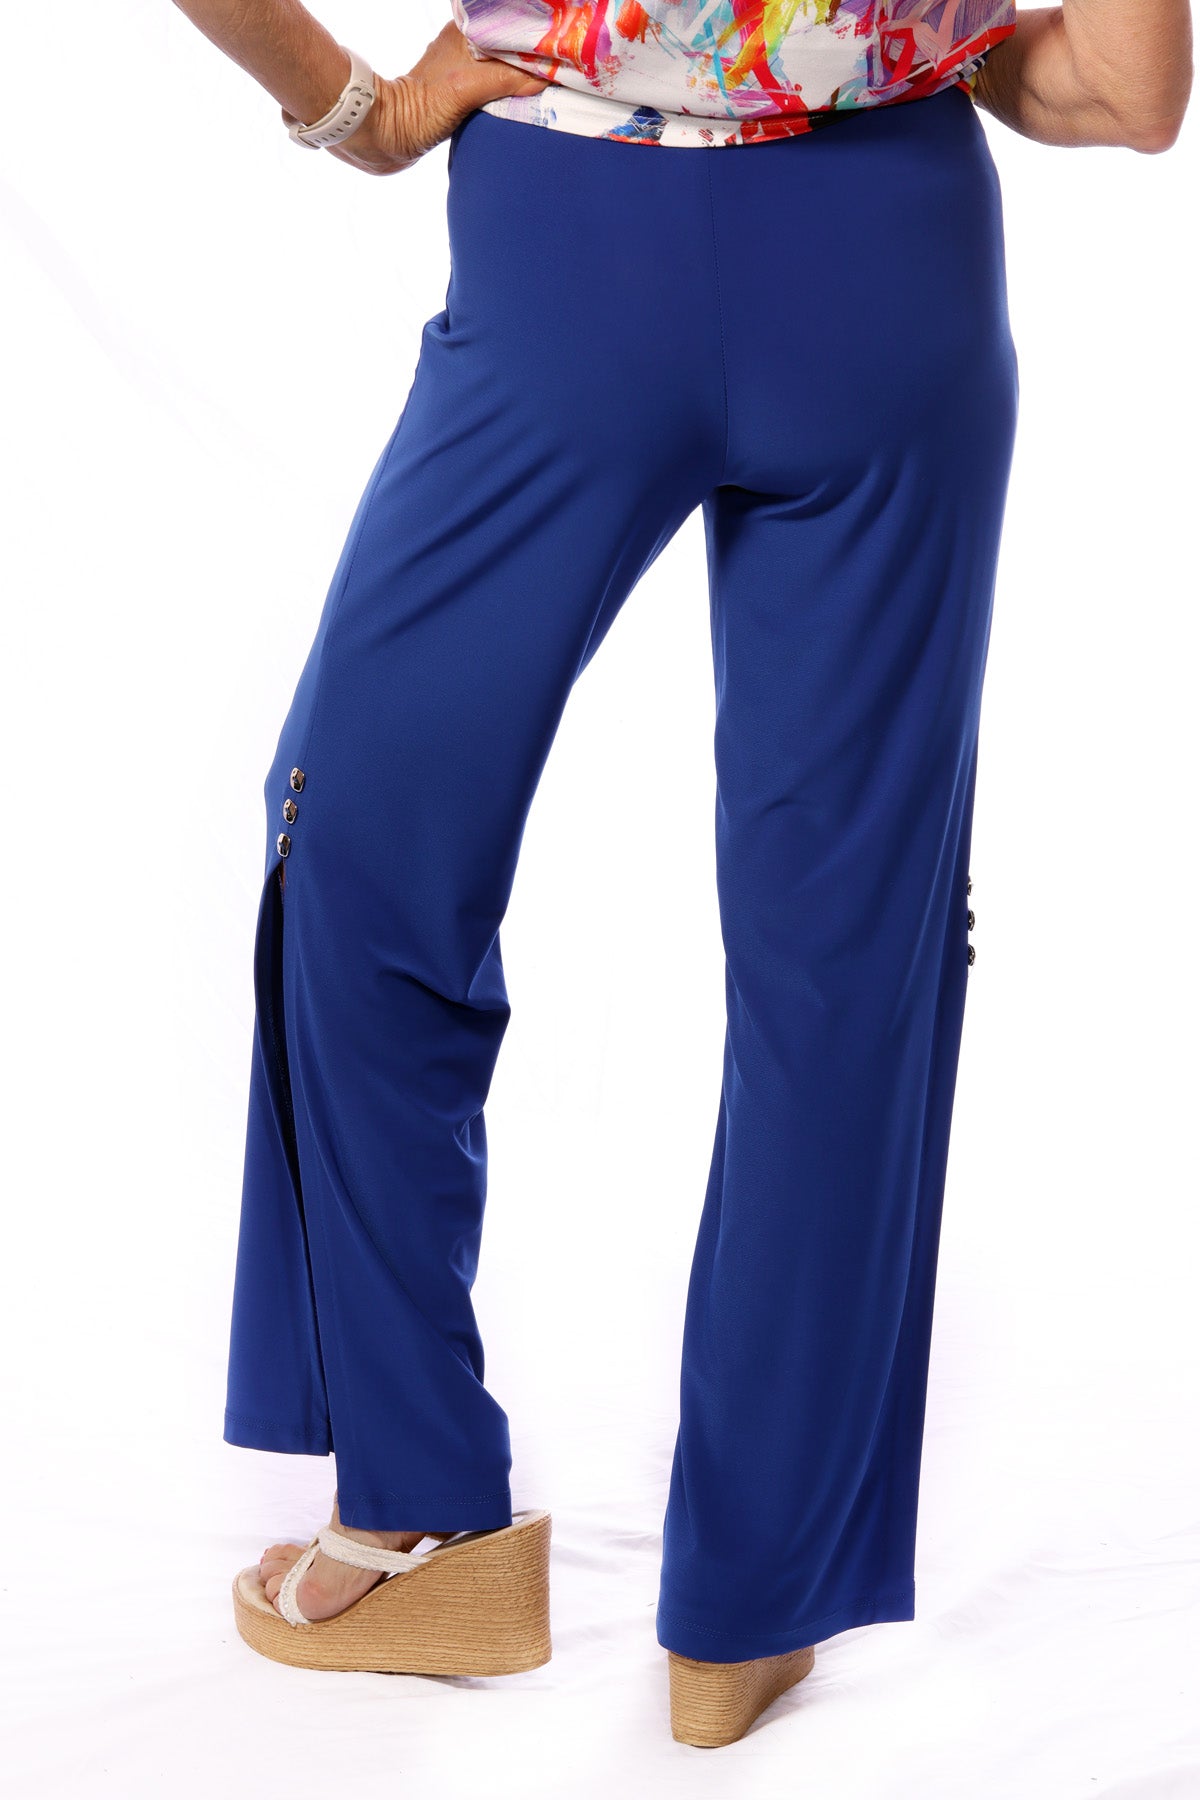 016- Gitane Royal Blue Sexy Side Slit Pants